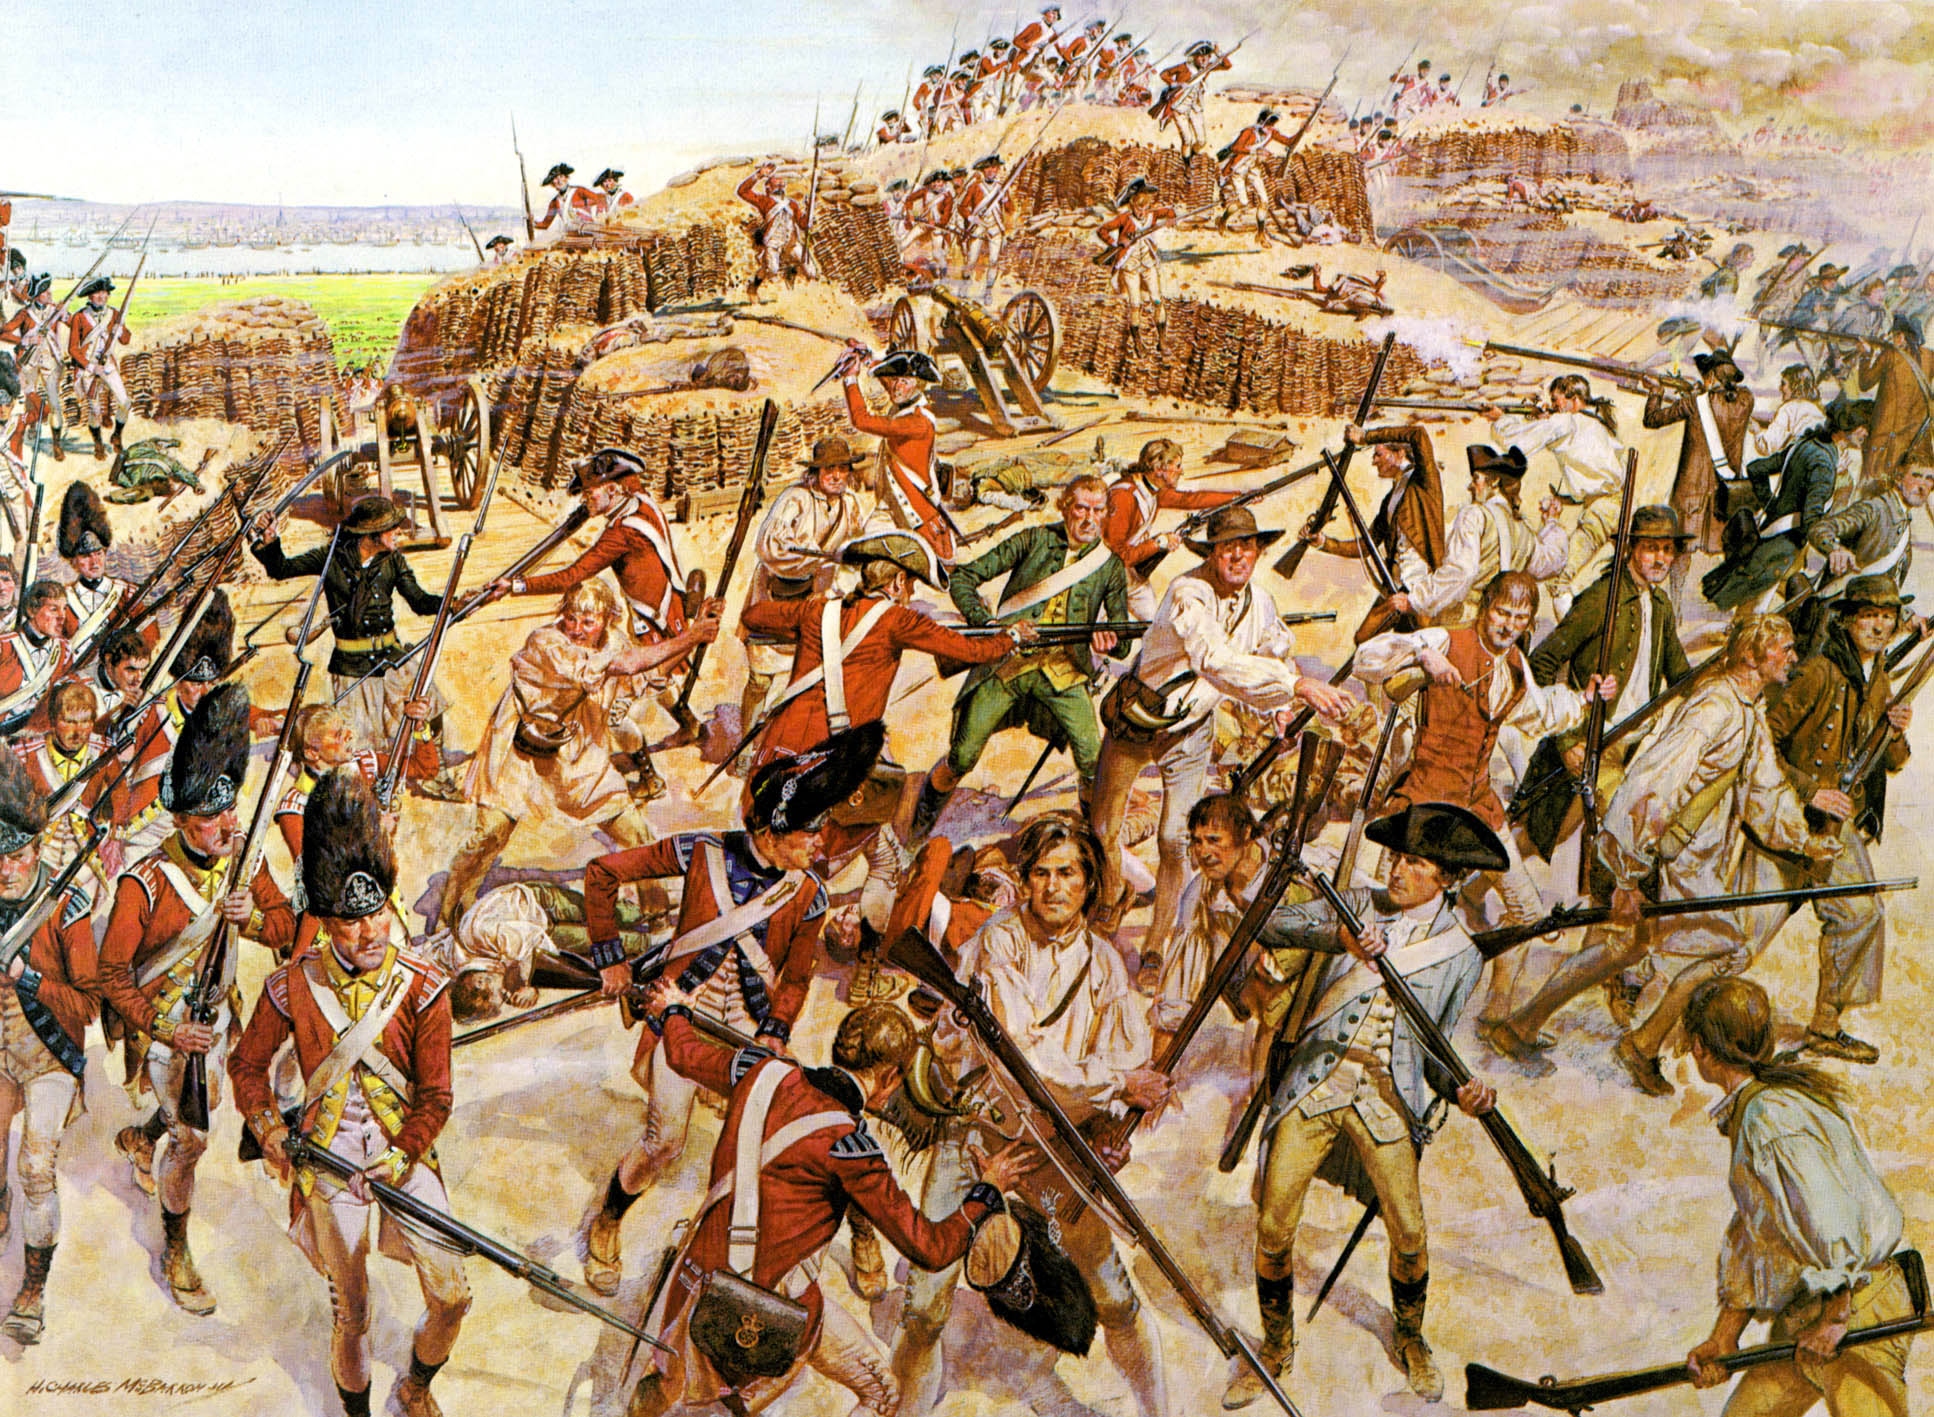 Revolutionary War - Battle of Bunker Hill (US. Army)